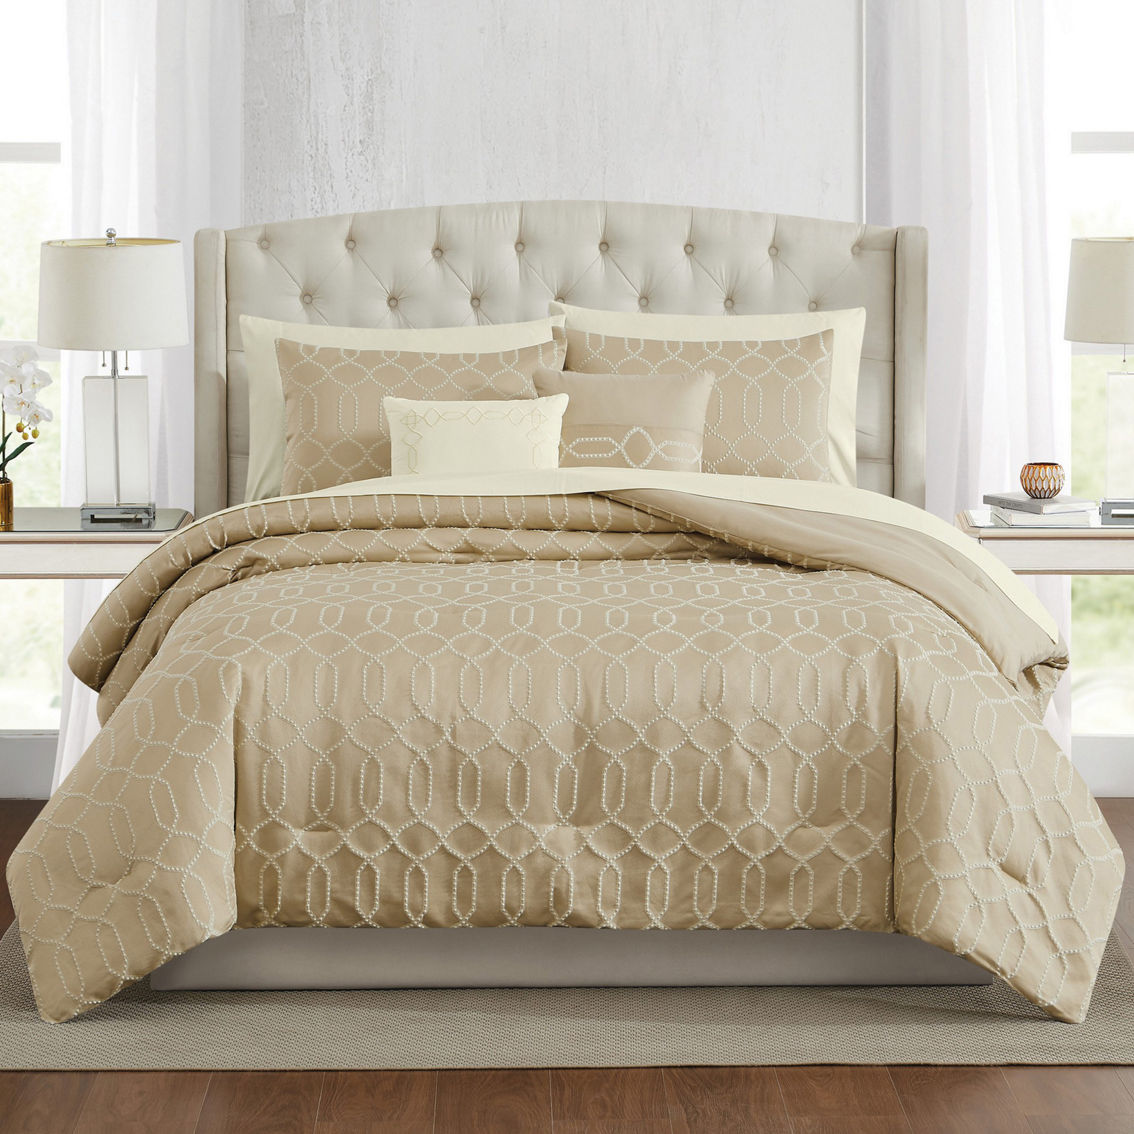 5th Avenue Lux Victoria Geo Gold Comforter Set - Image 2 of 8